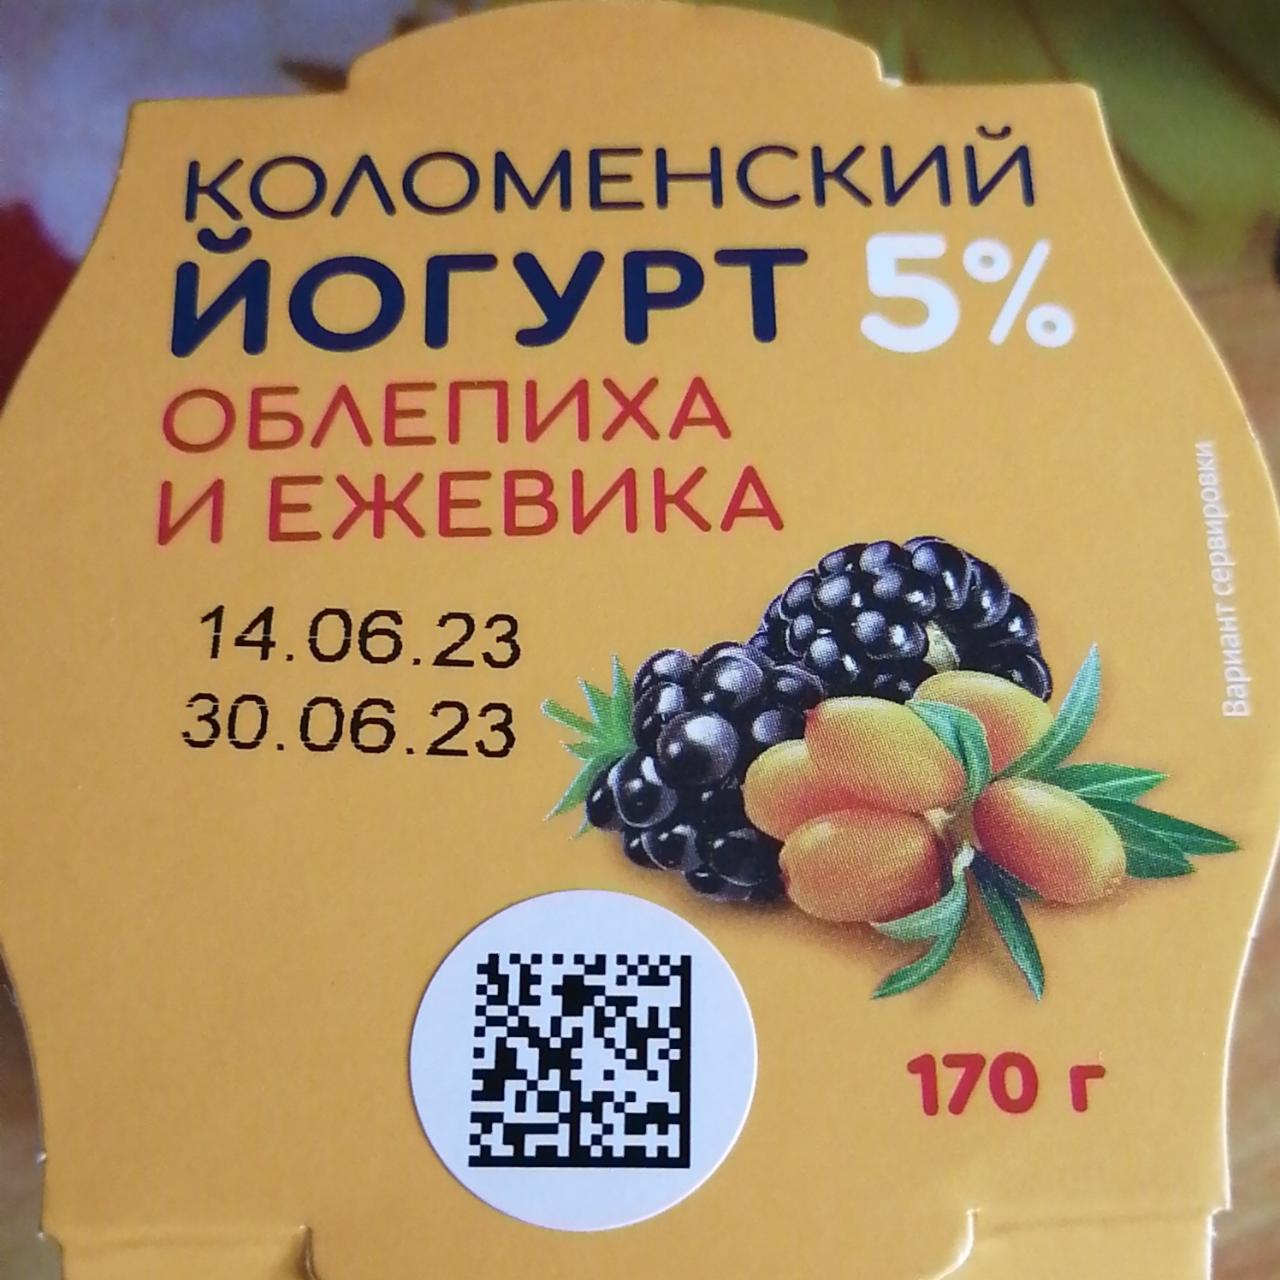 Фото - Йогурт 5% облепиха и ежевика Коломенский